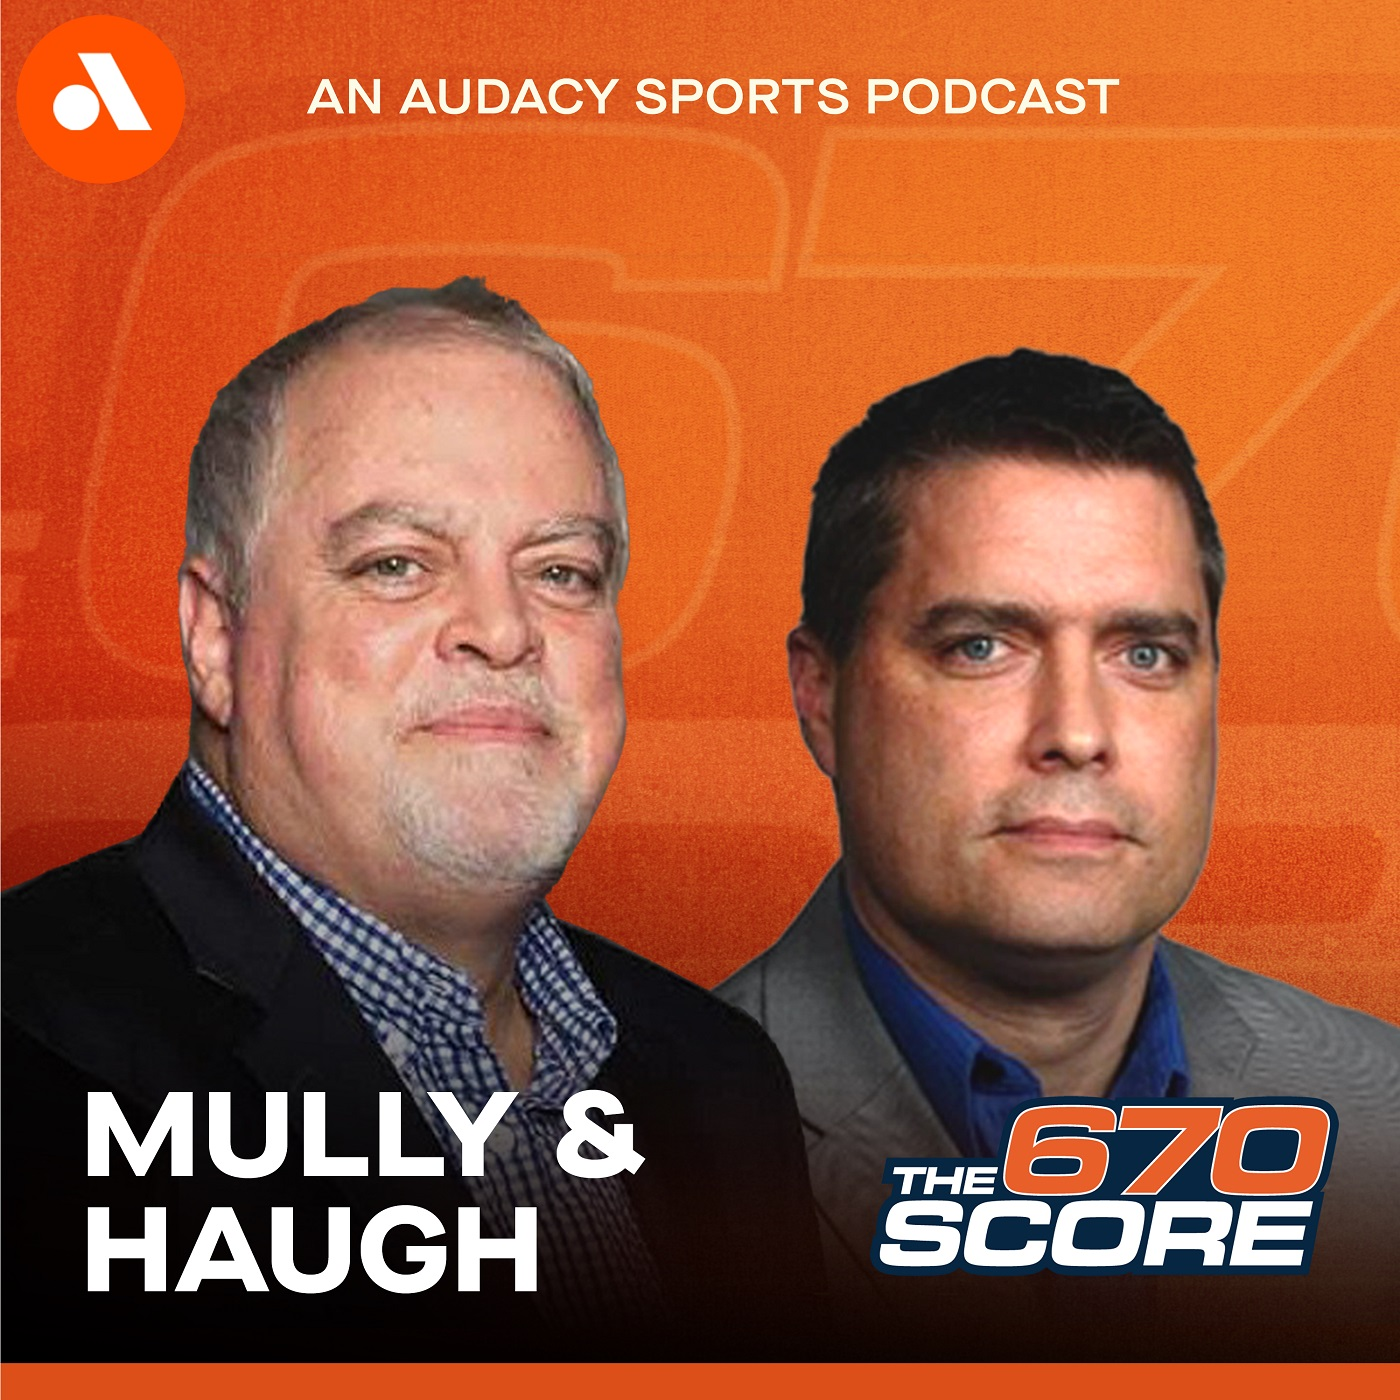 Mully & Haugh: Lamond Pope & Evan Altman interviews (Hour 3)